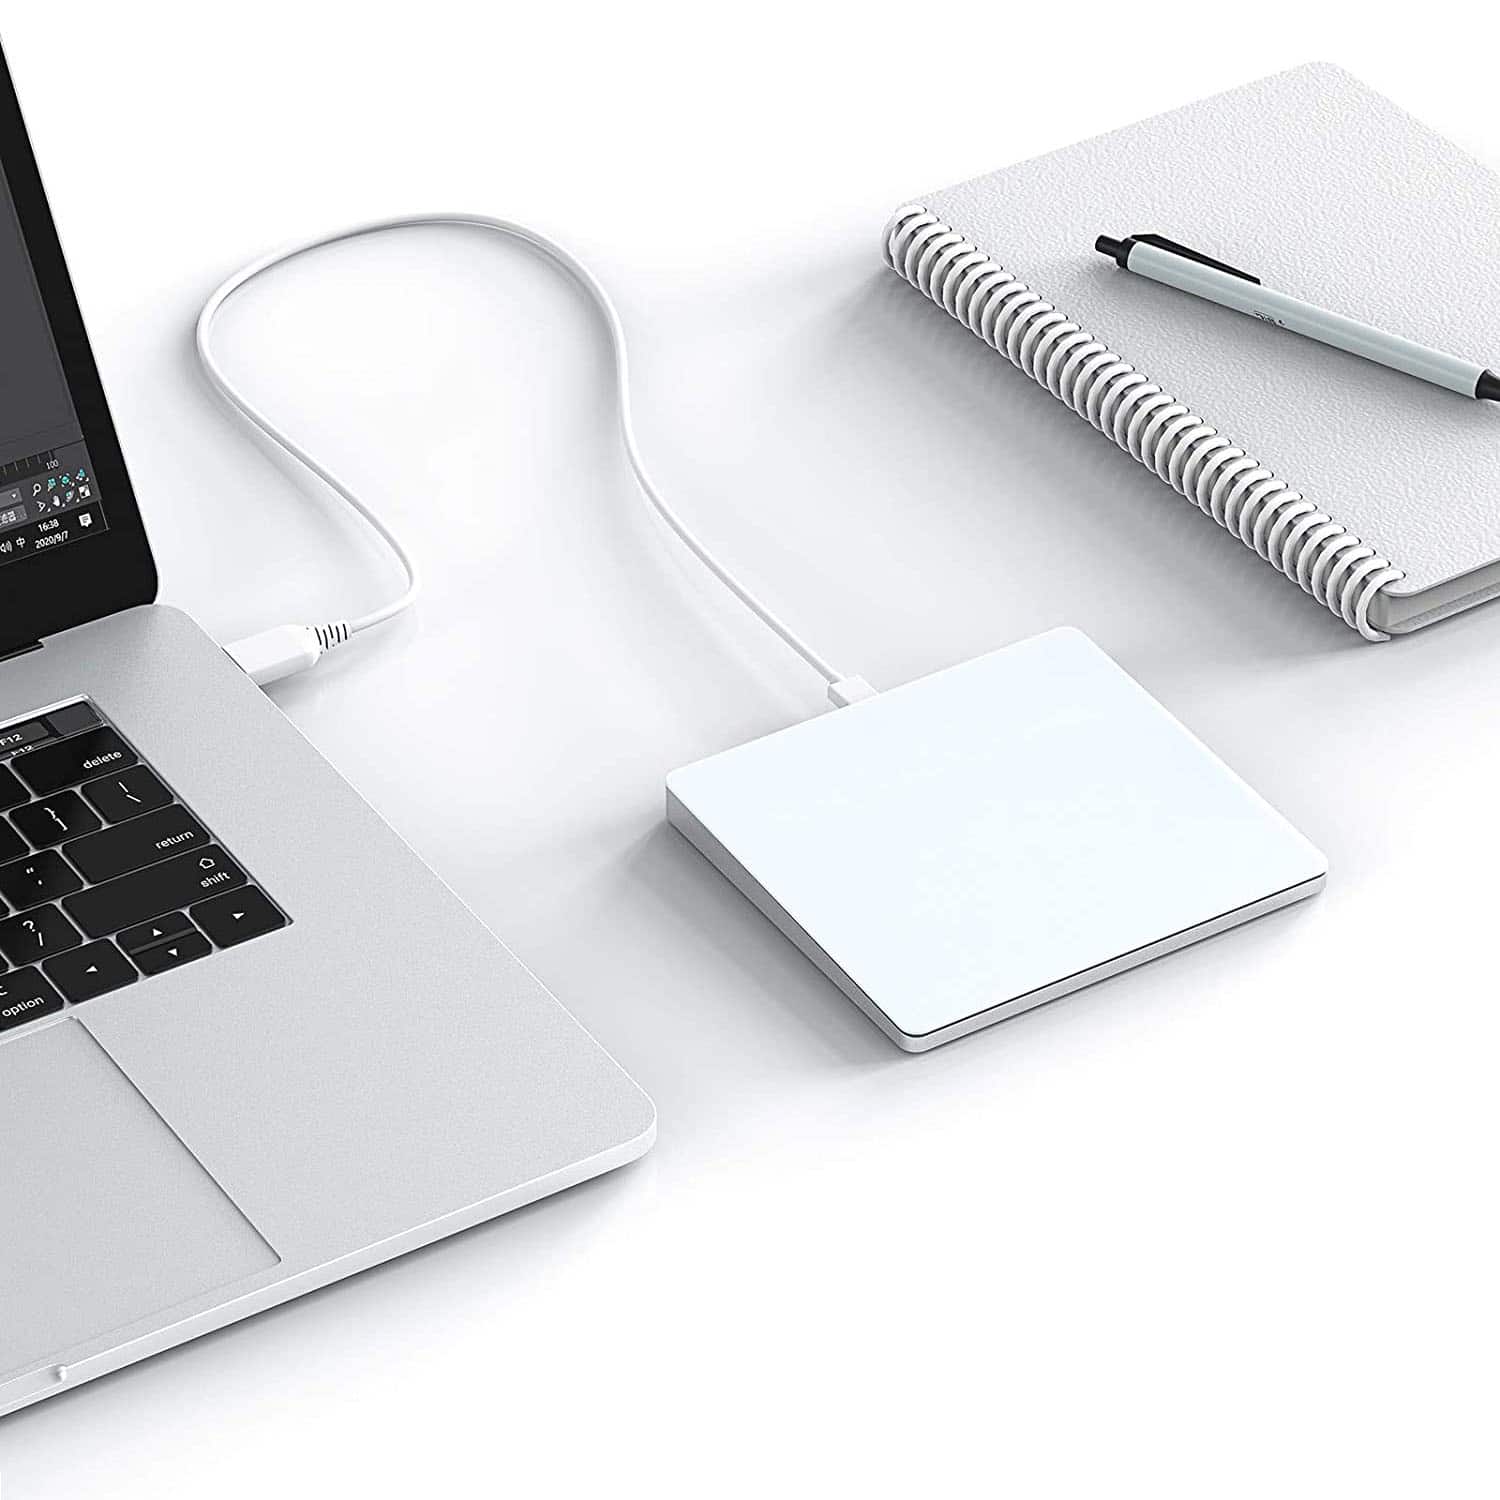 HAVIT TP050-S Trackpad USB Touch Pad for Laptop Notebook PC Desktop